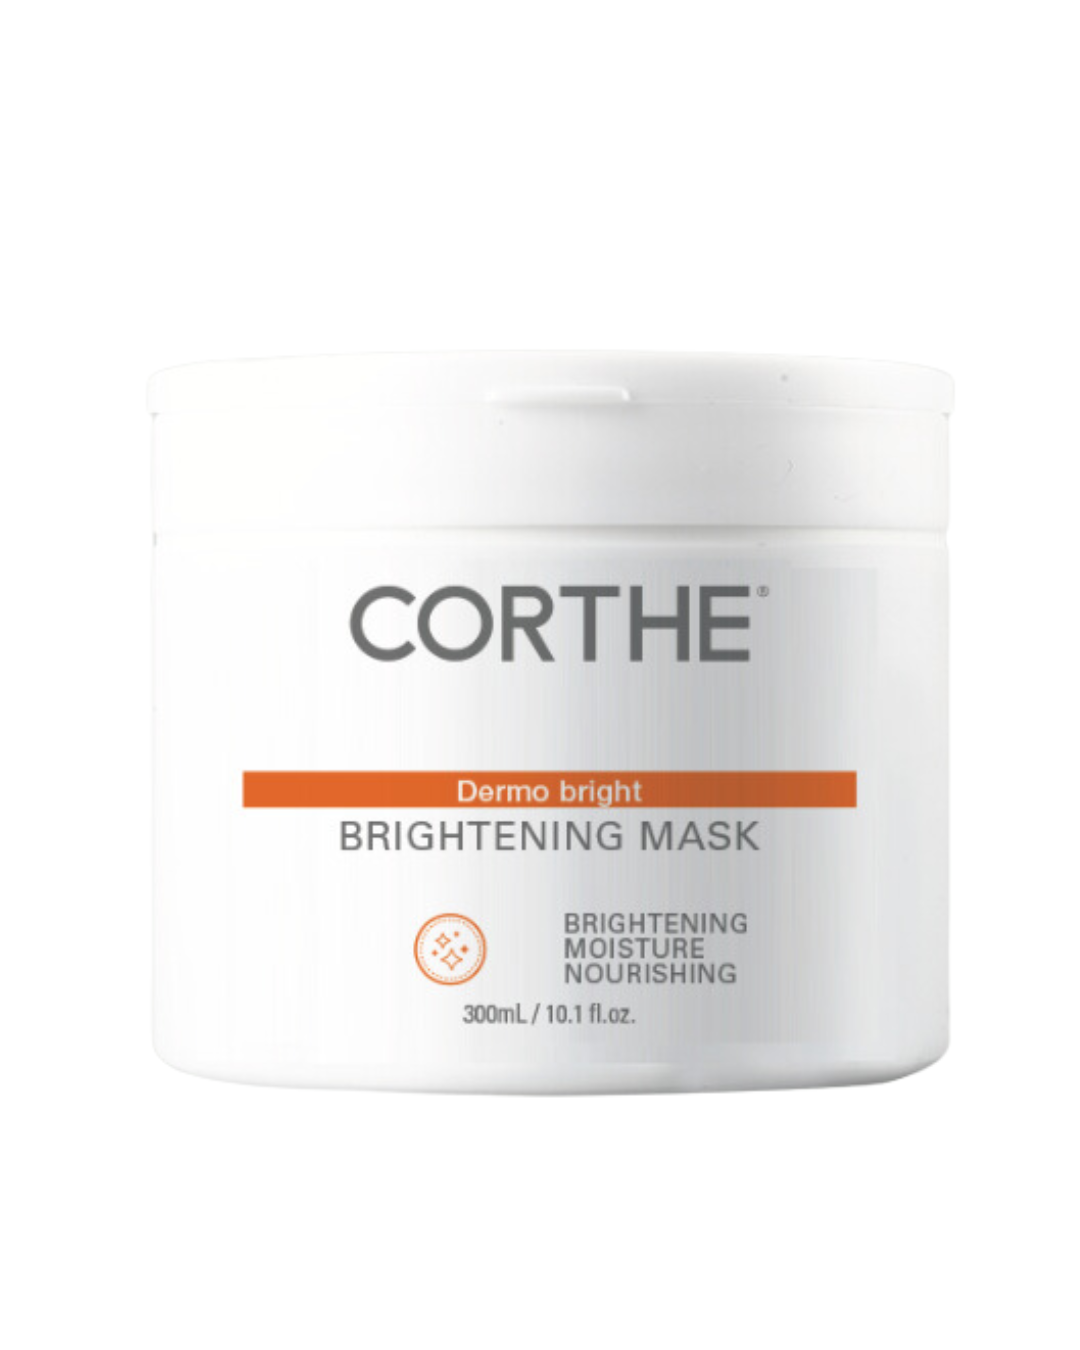 Corthe Brightening Mask